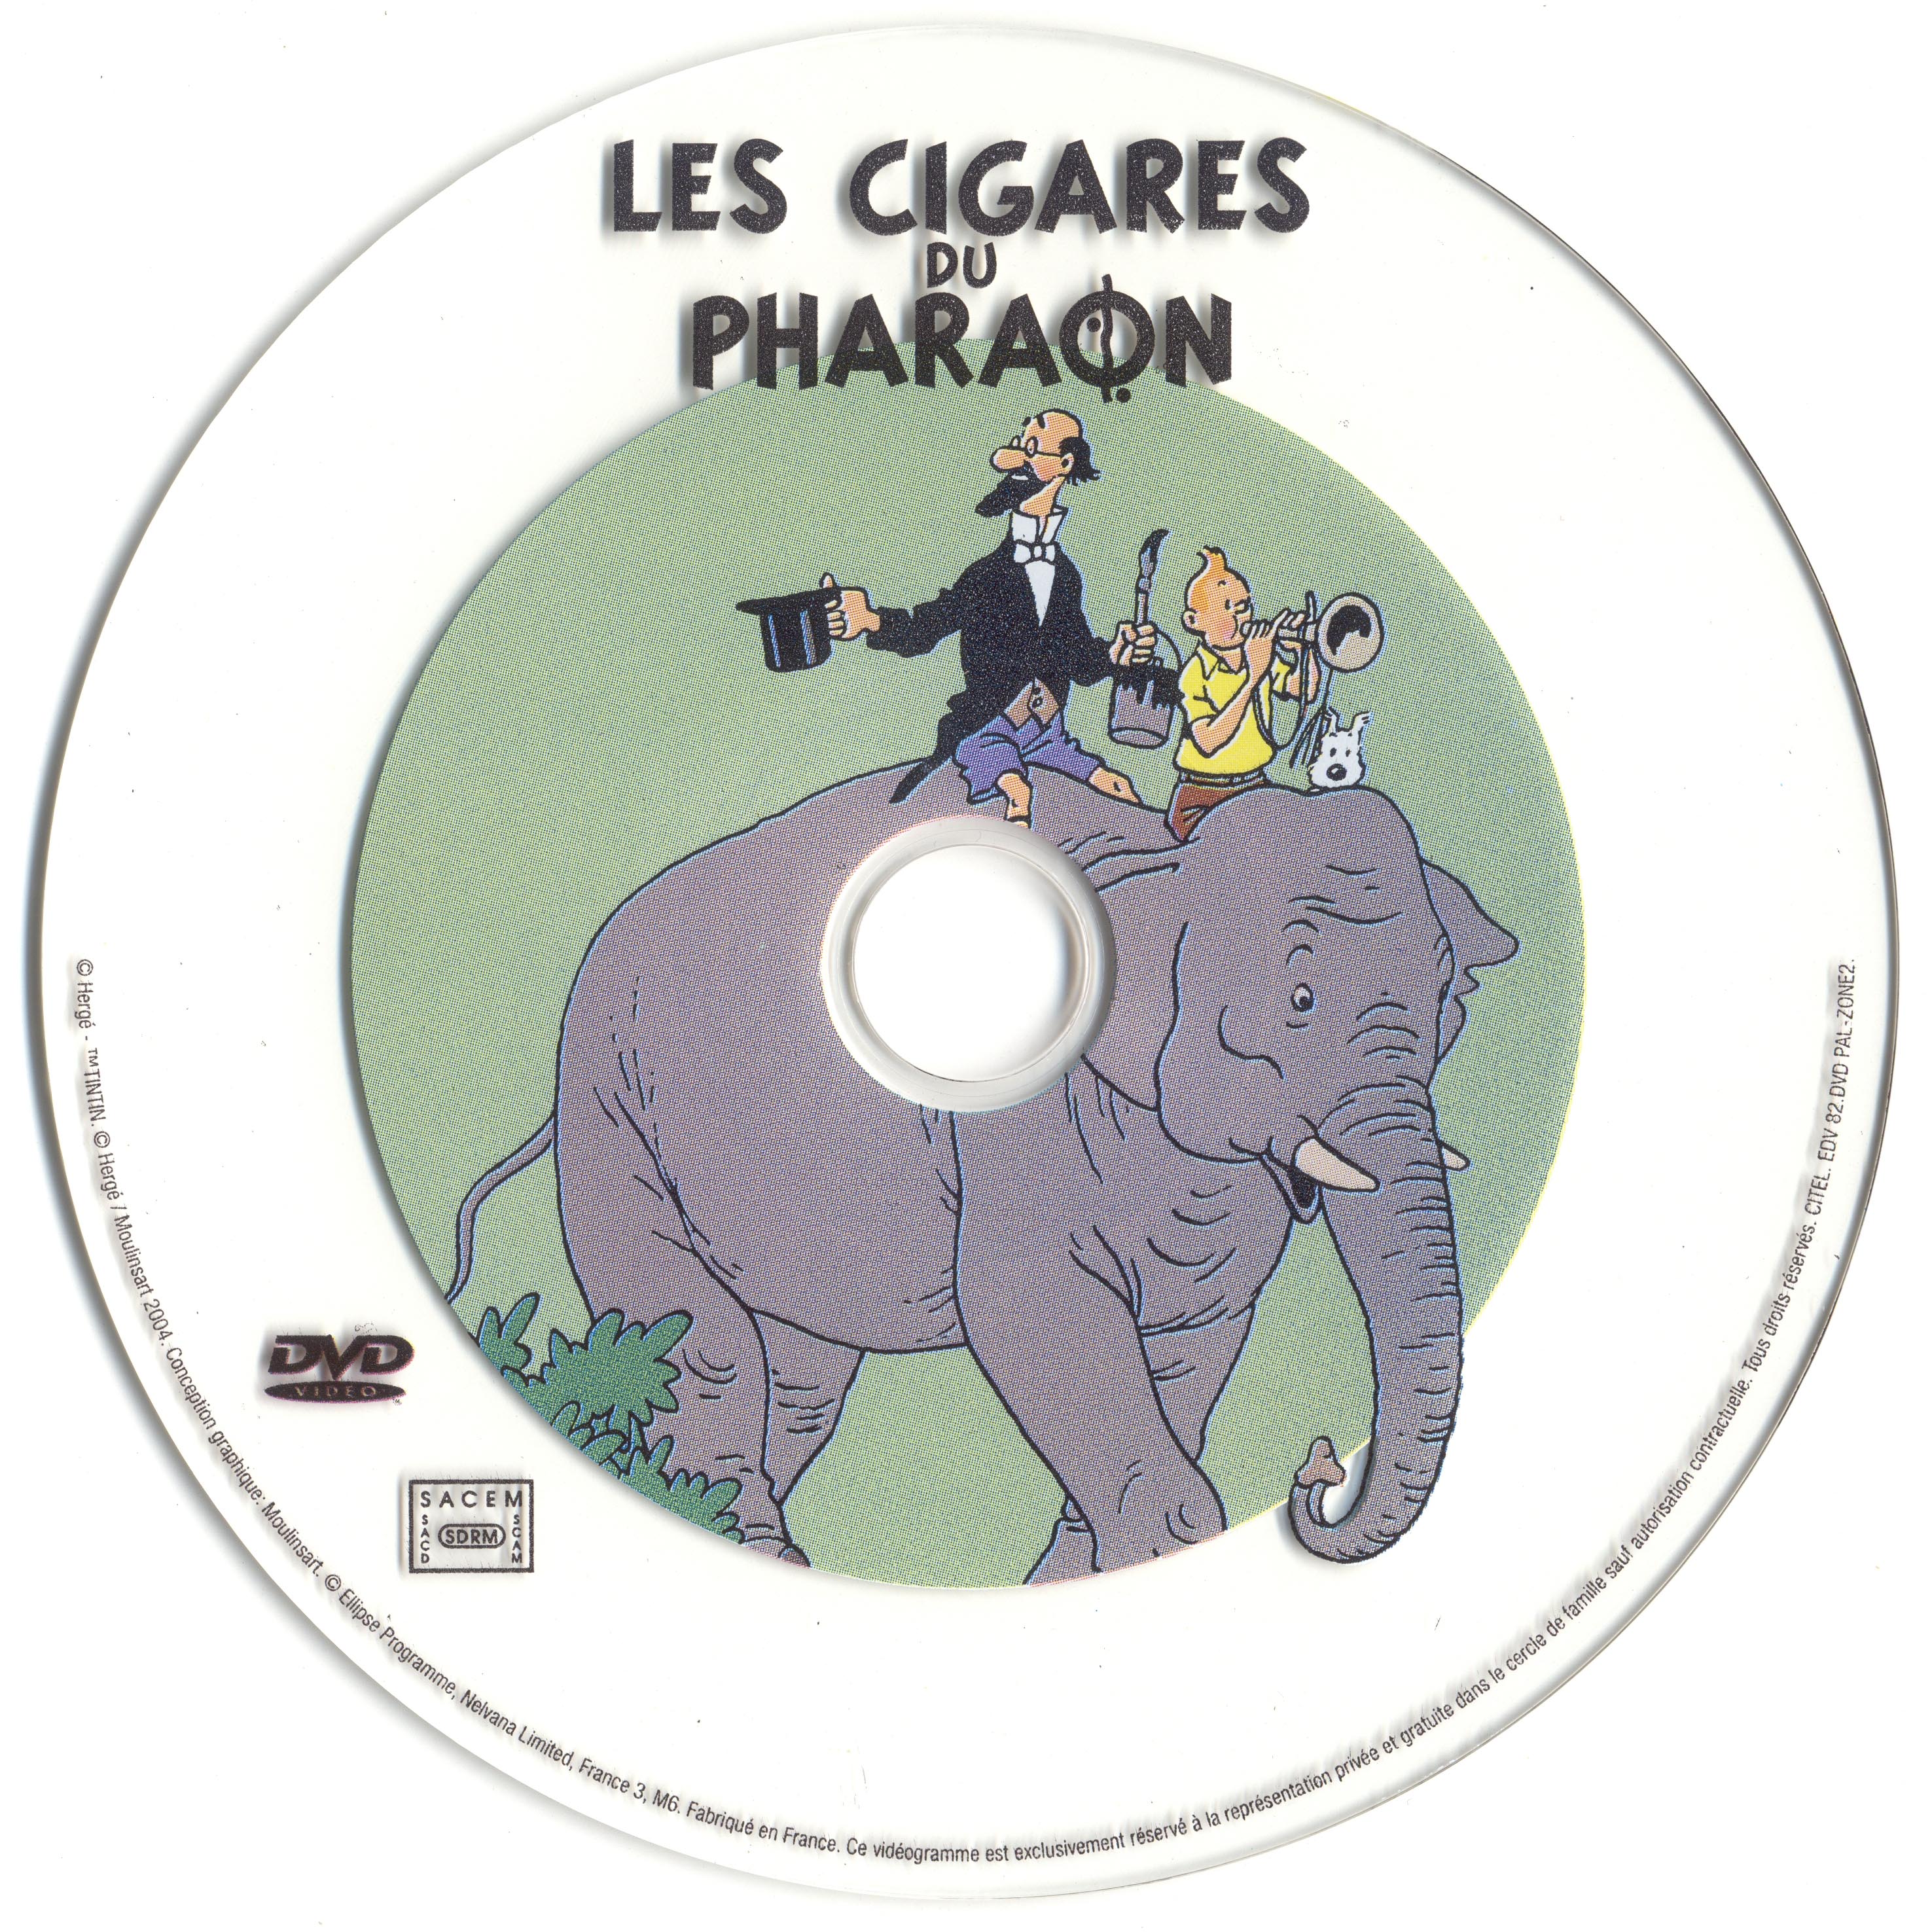 Tintin - Les cigares du pharaon